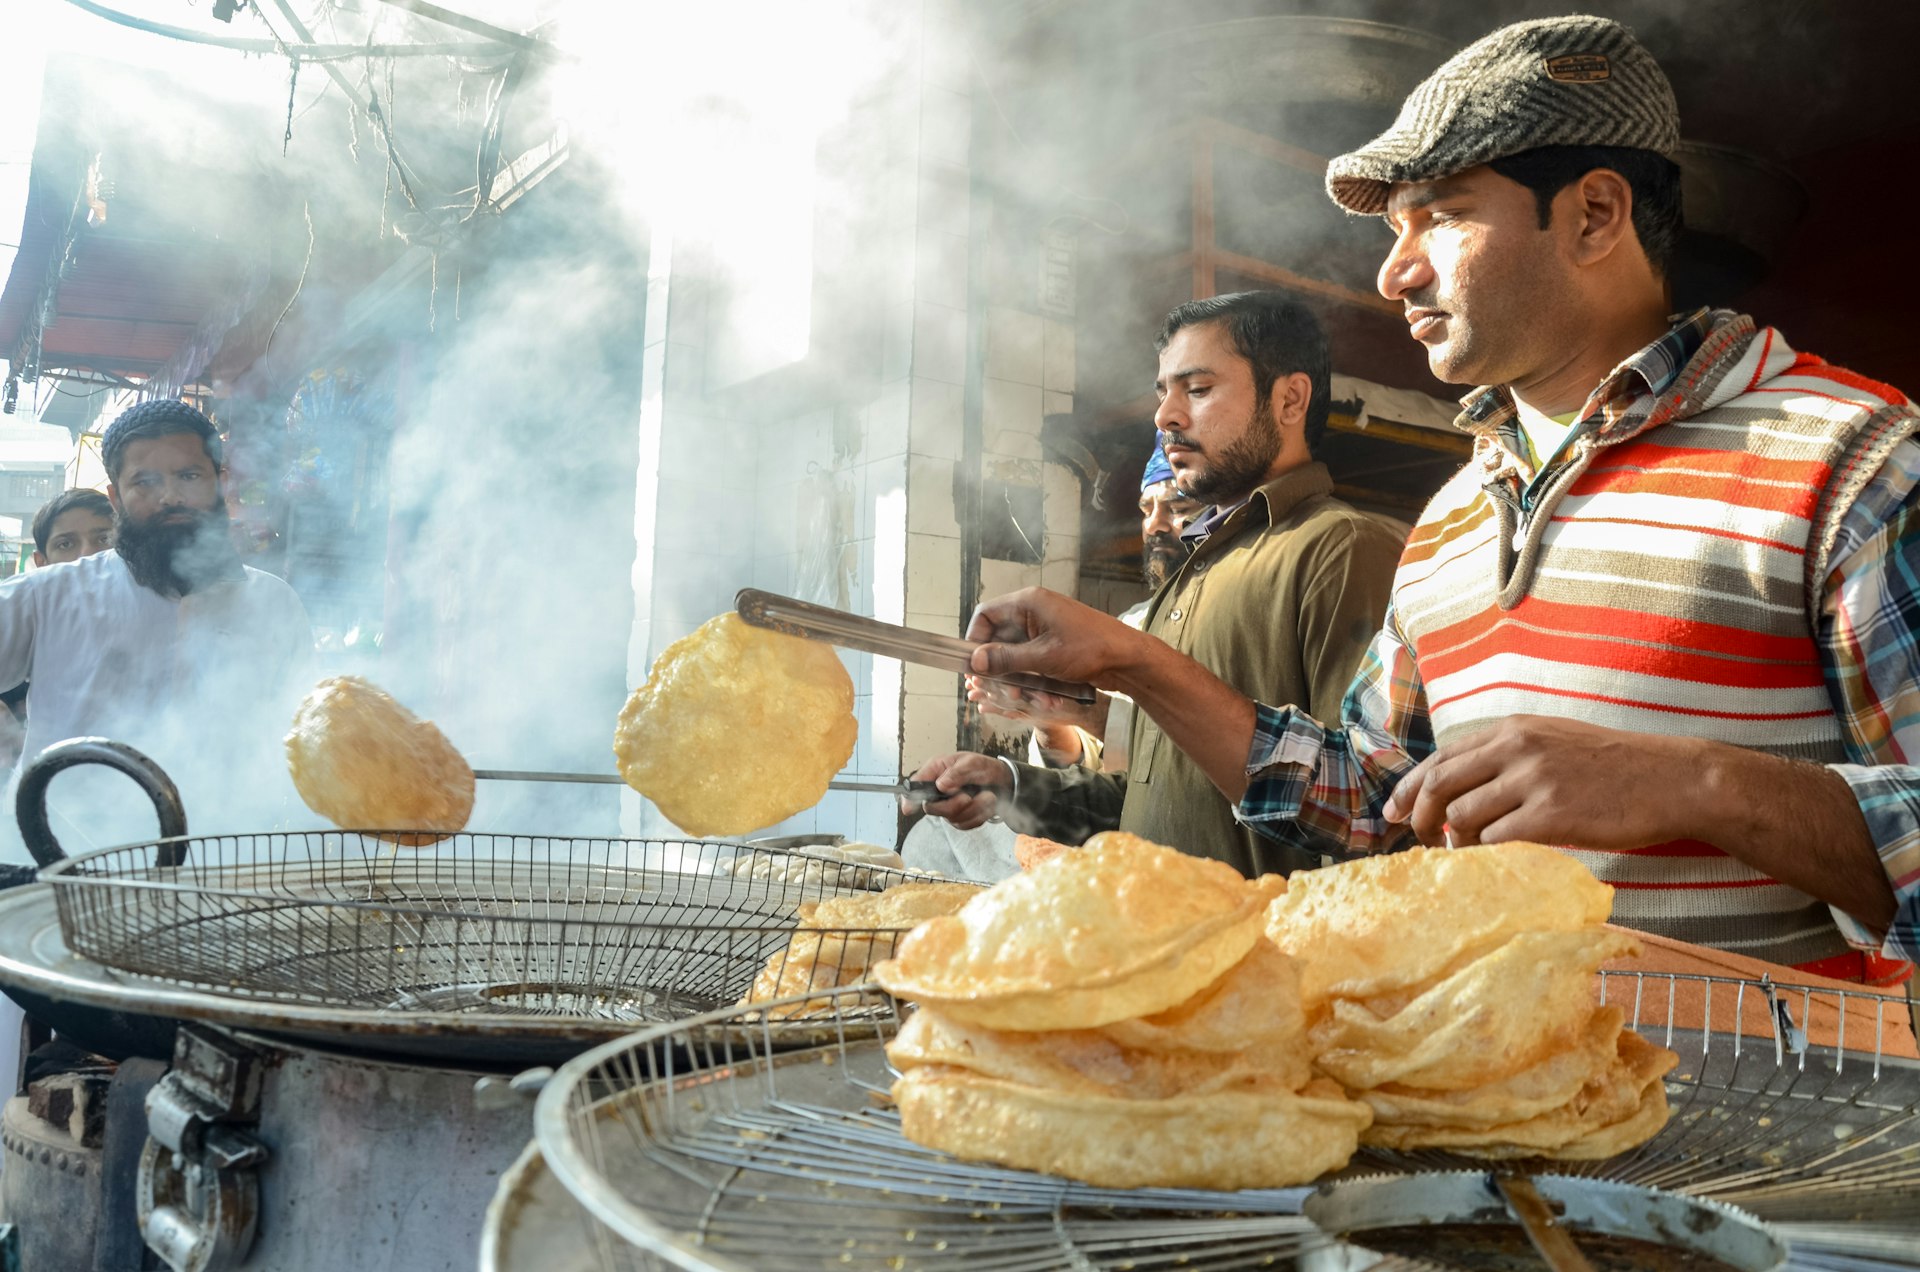 Vendors selling street food in Pakistan